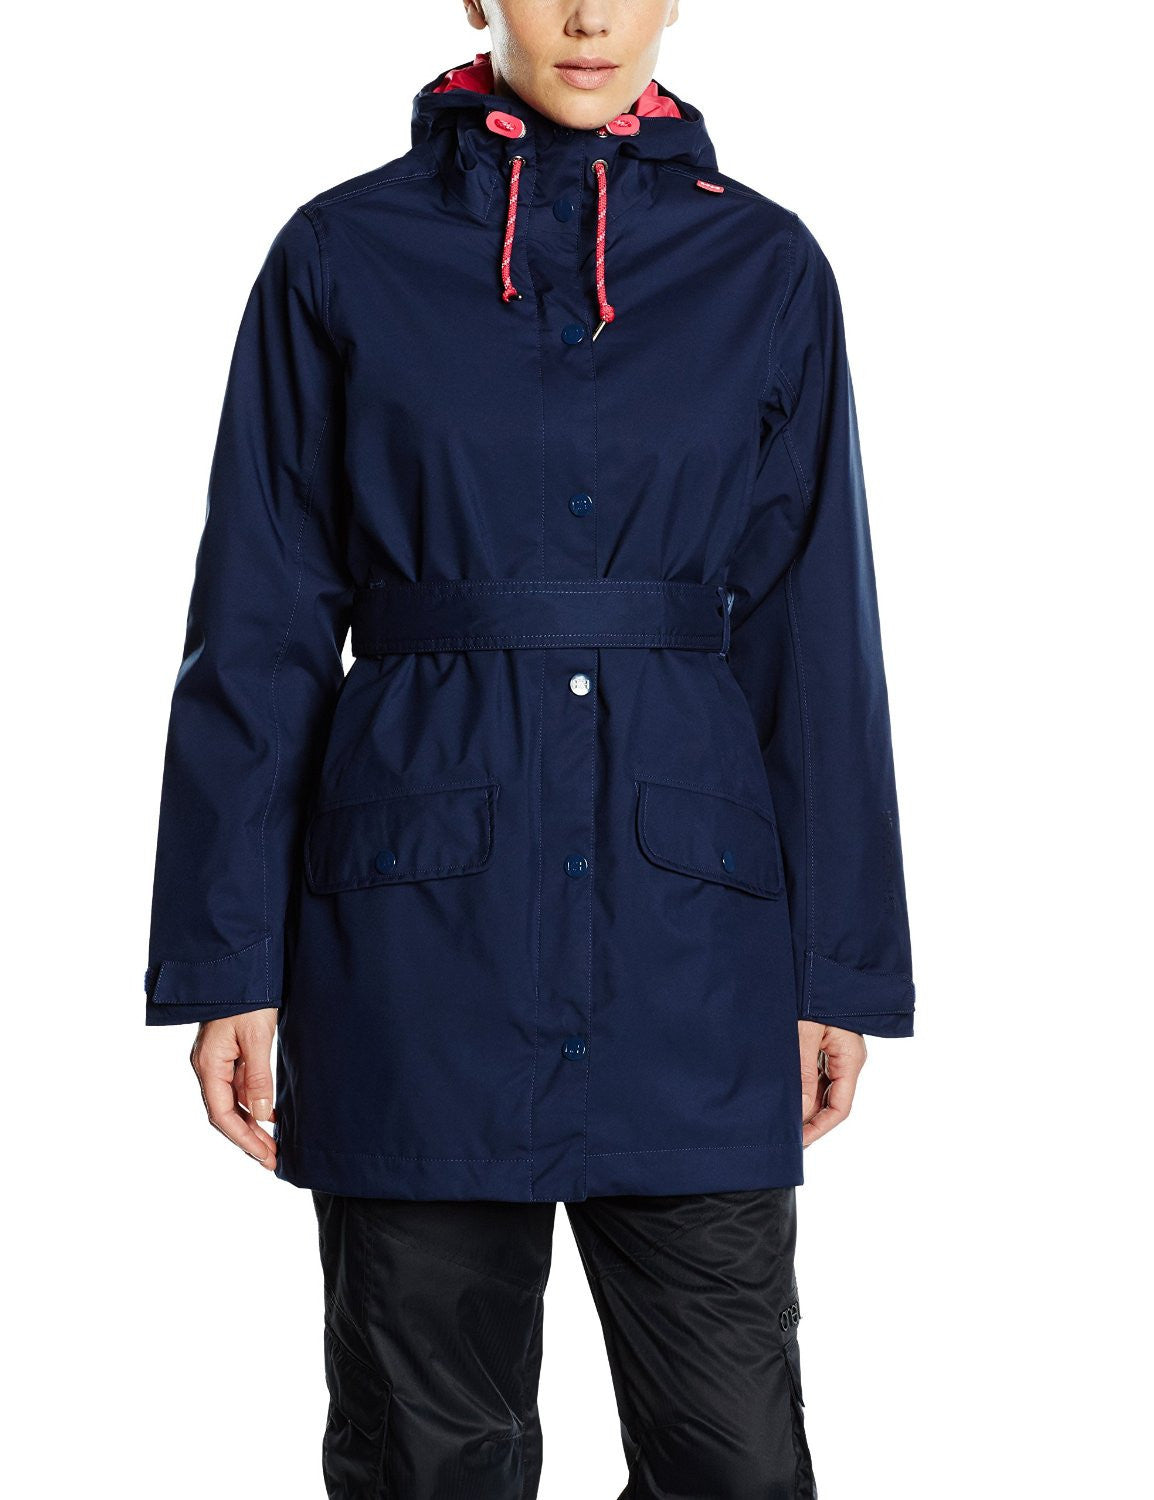 Weatherproof Ladies' Anorak Rain Jacket